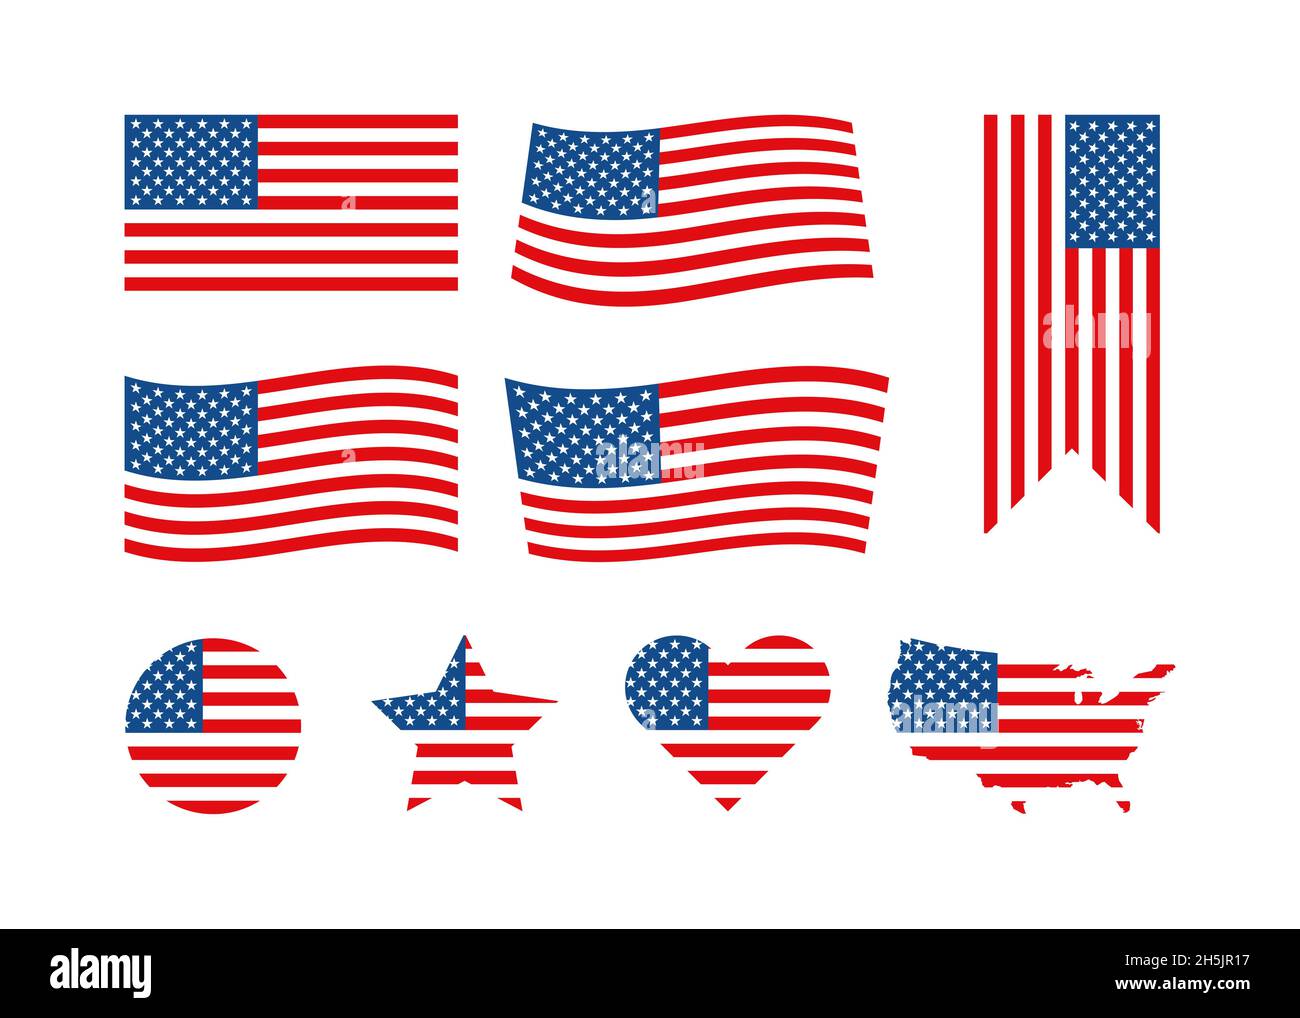 Flag USA set isolated vector icon in flat style. United states of America national flag symbols set. American product emblem, illustration. Stock Photo